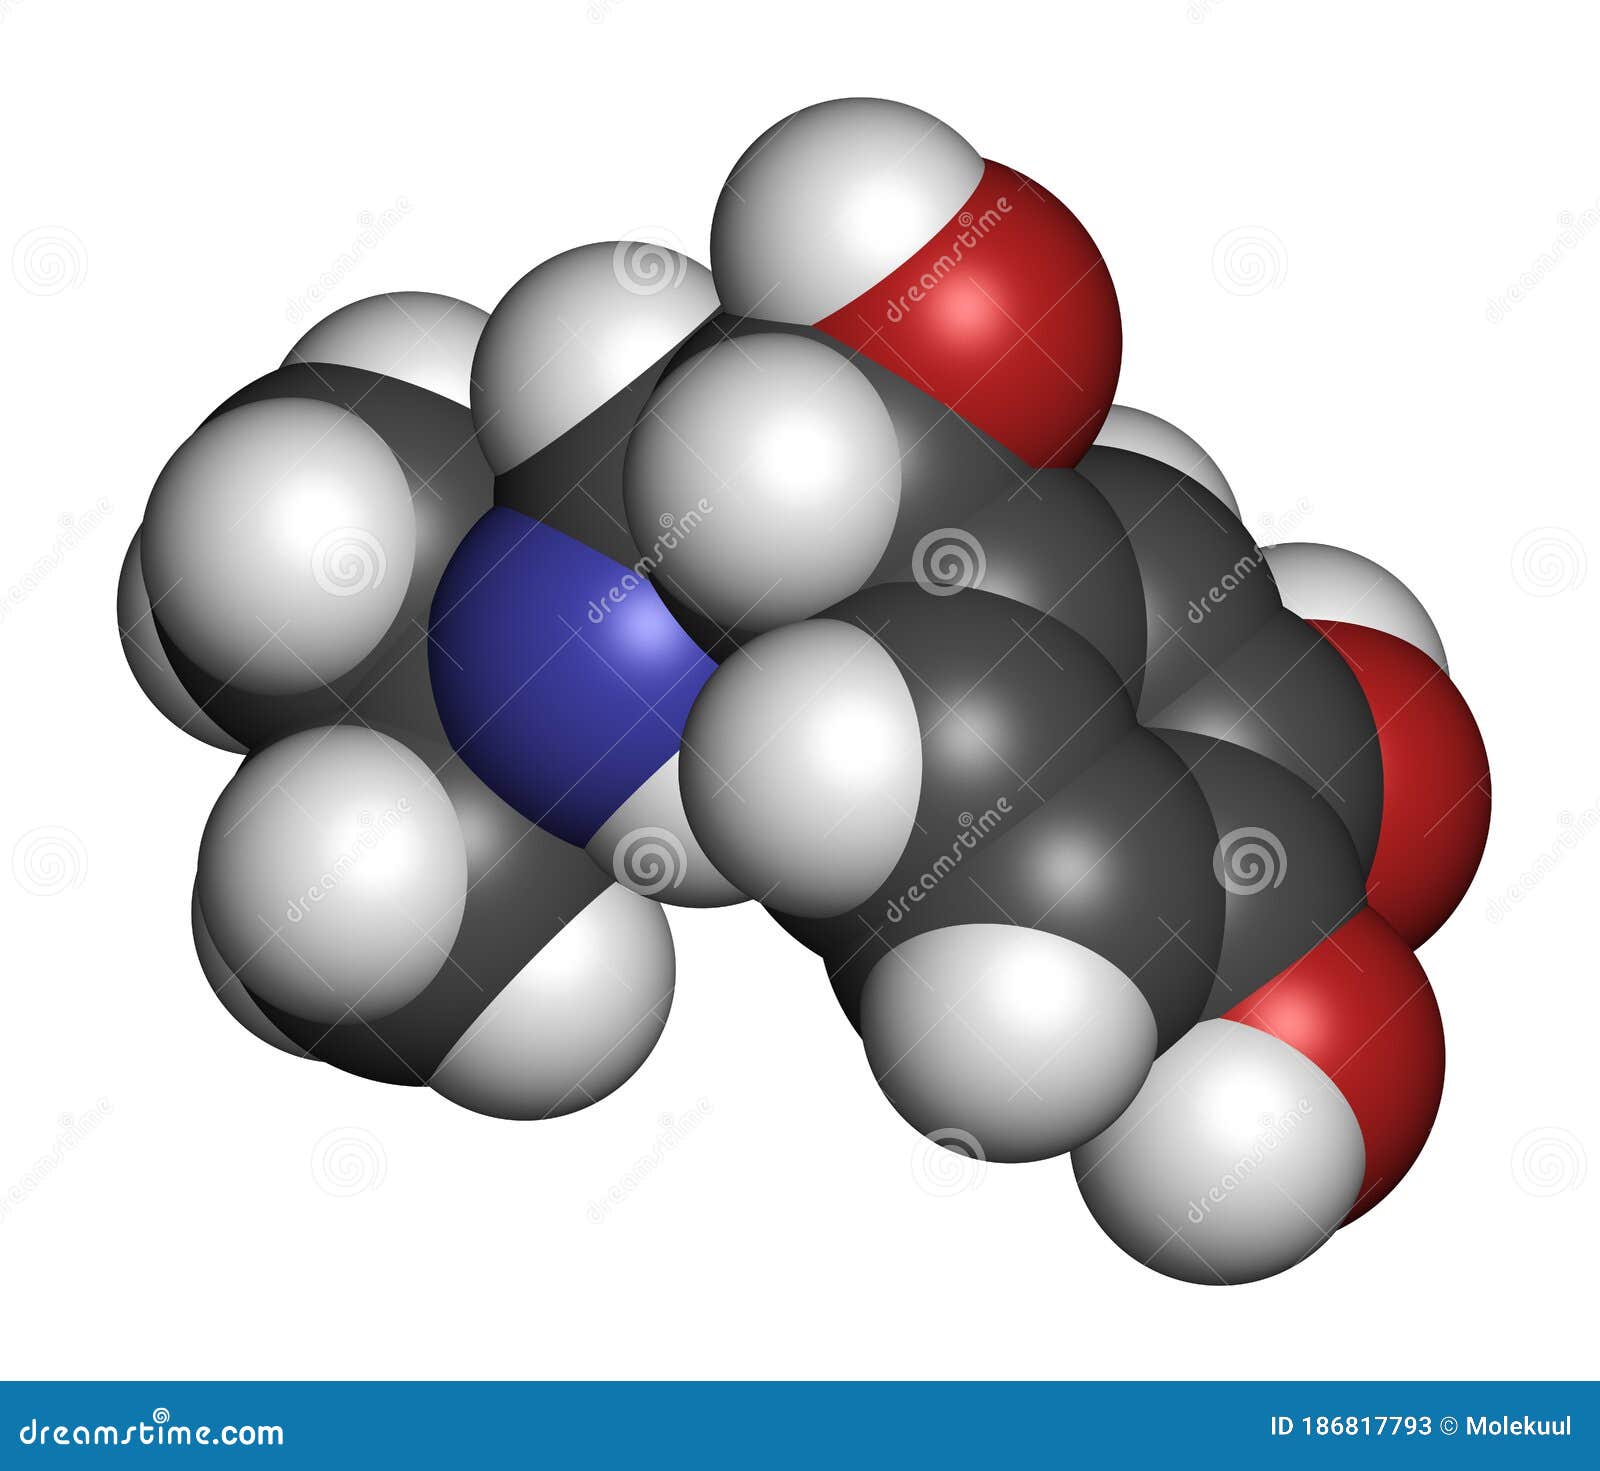 isoprenaline (isoproterenol) drug molecule. used in treatment of bradycardia, heart block and asthma. 3d rendering. atoms are